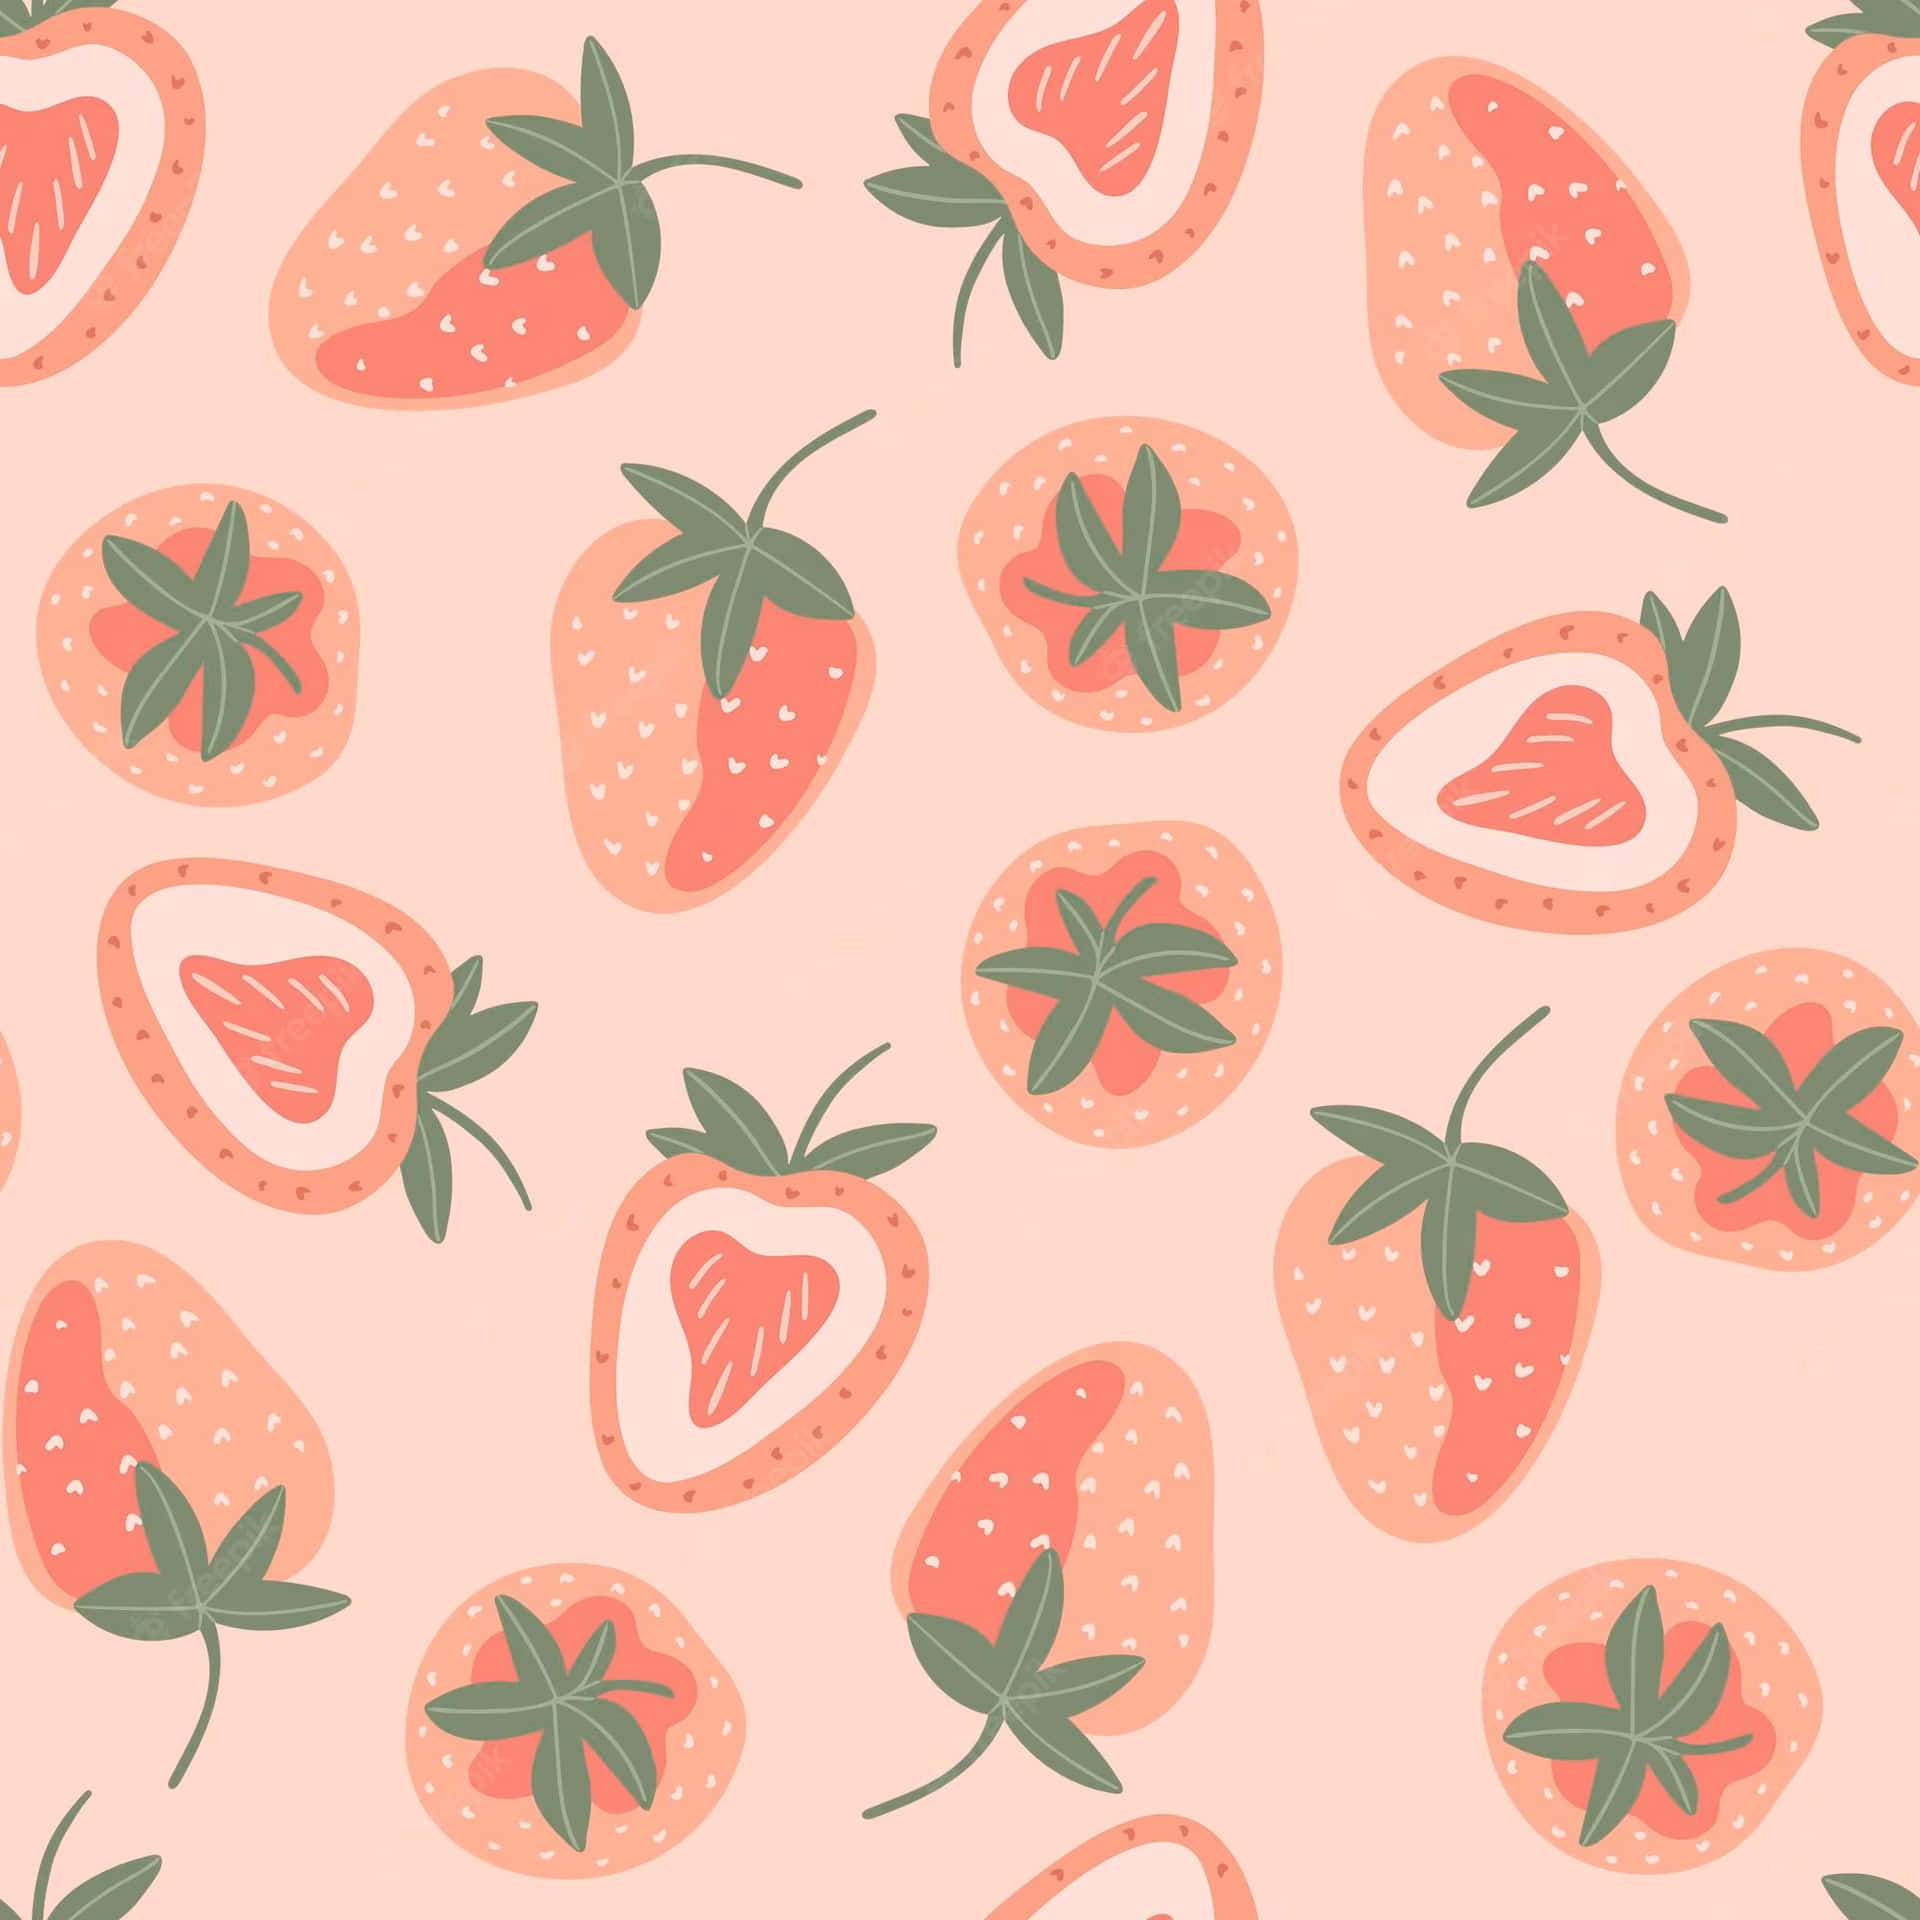 strawberries wallpaper